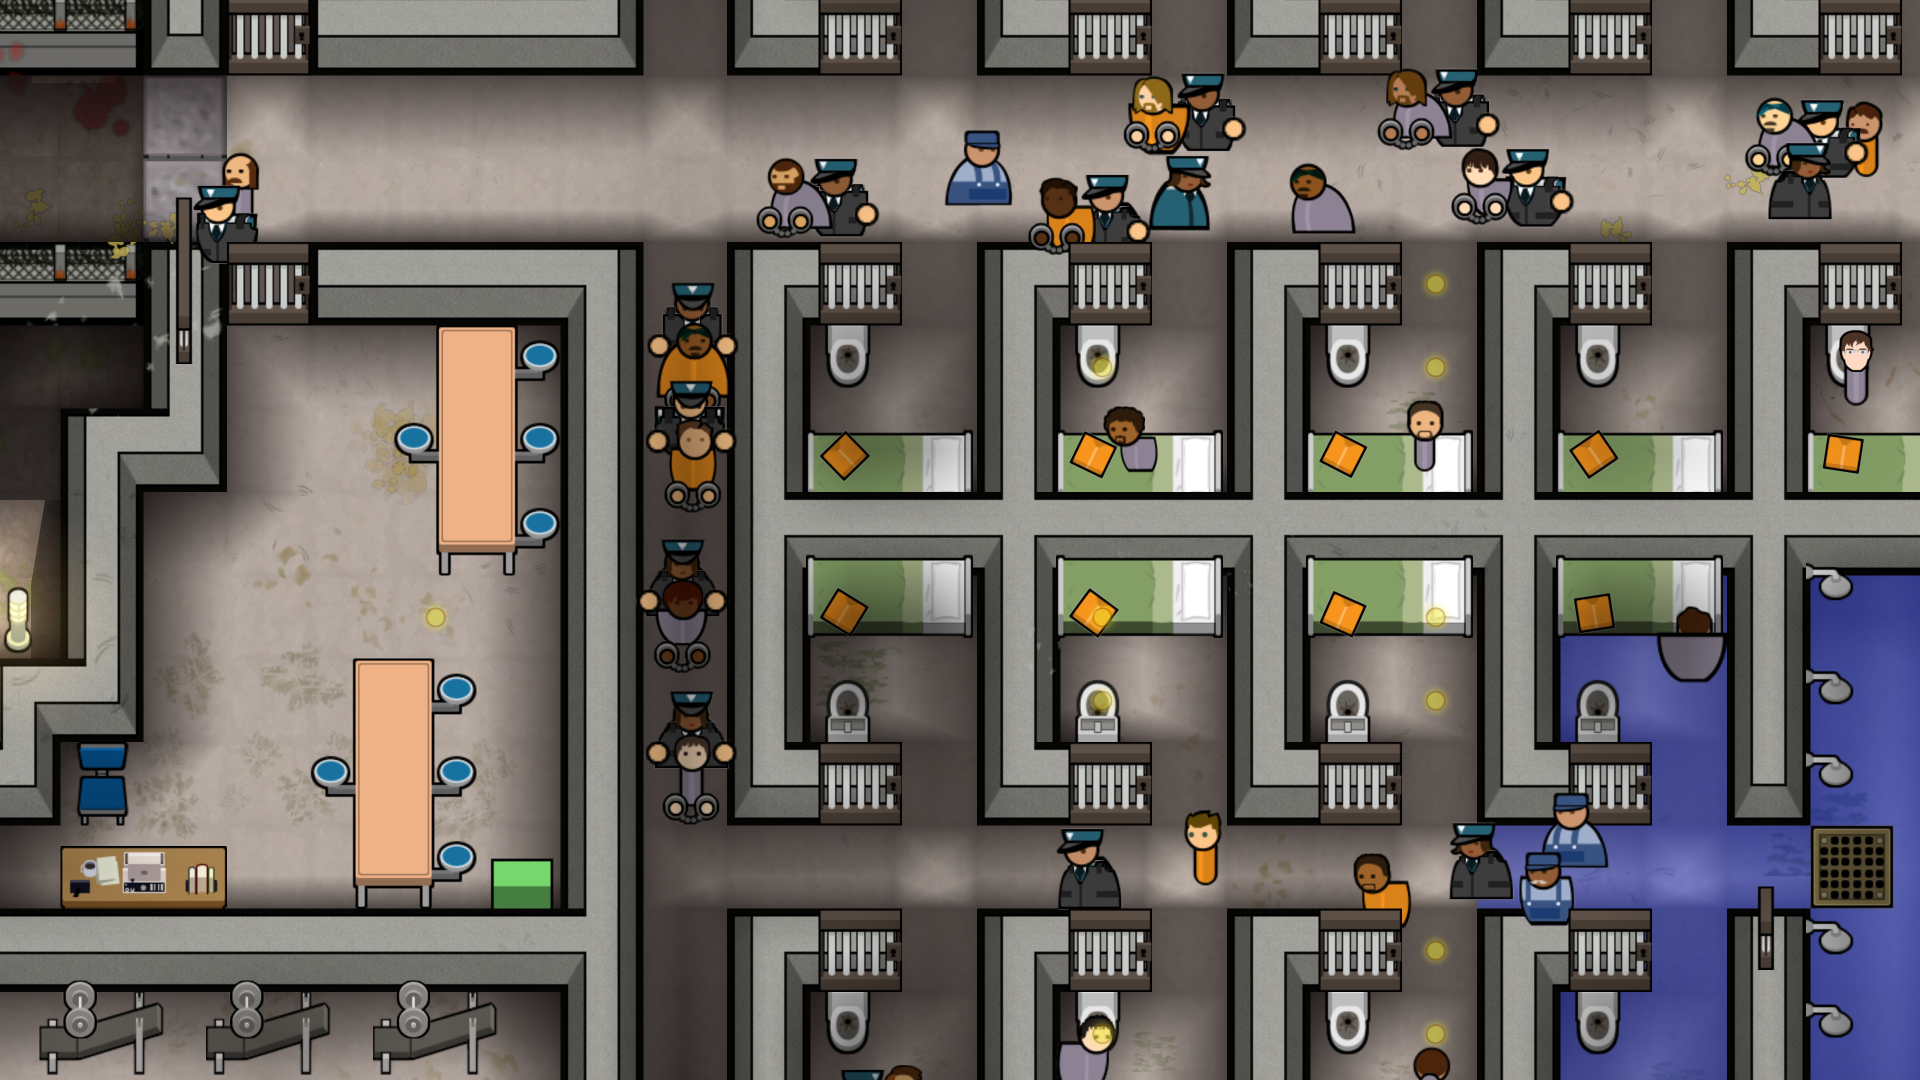 Prisoners Taken to Cells